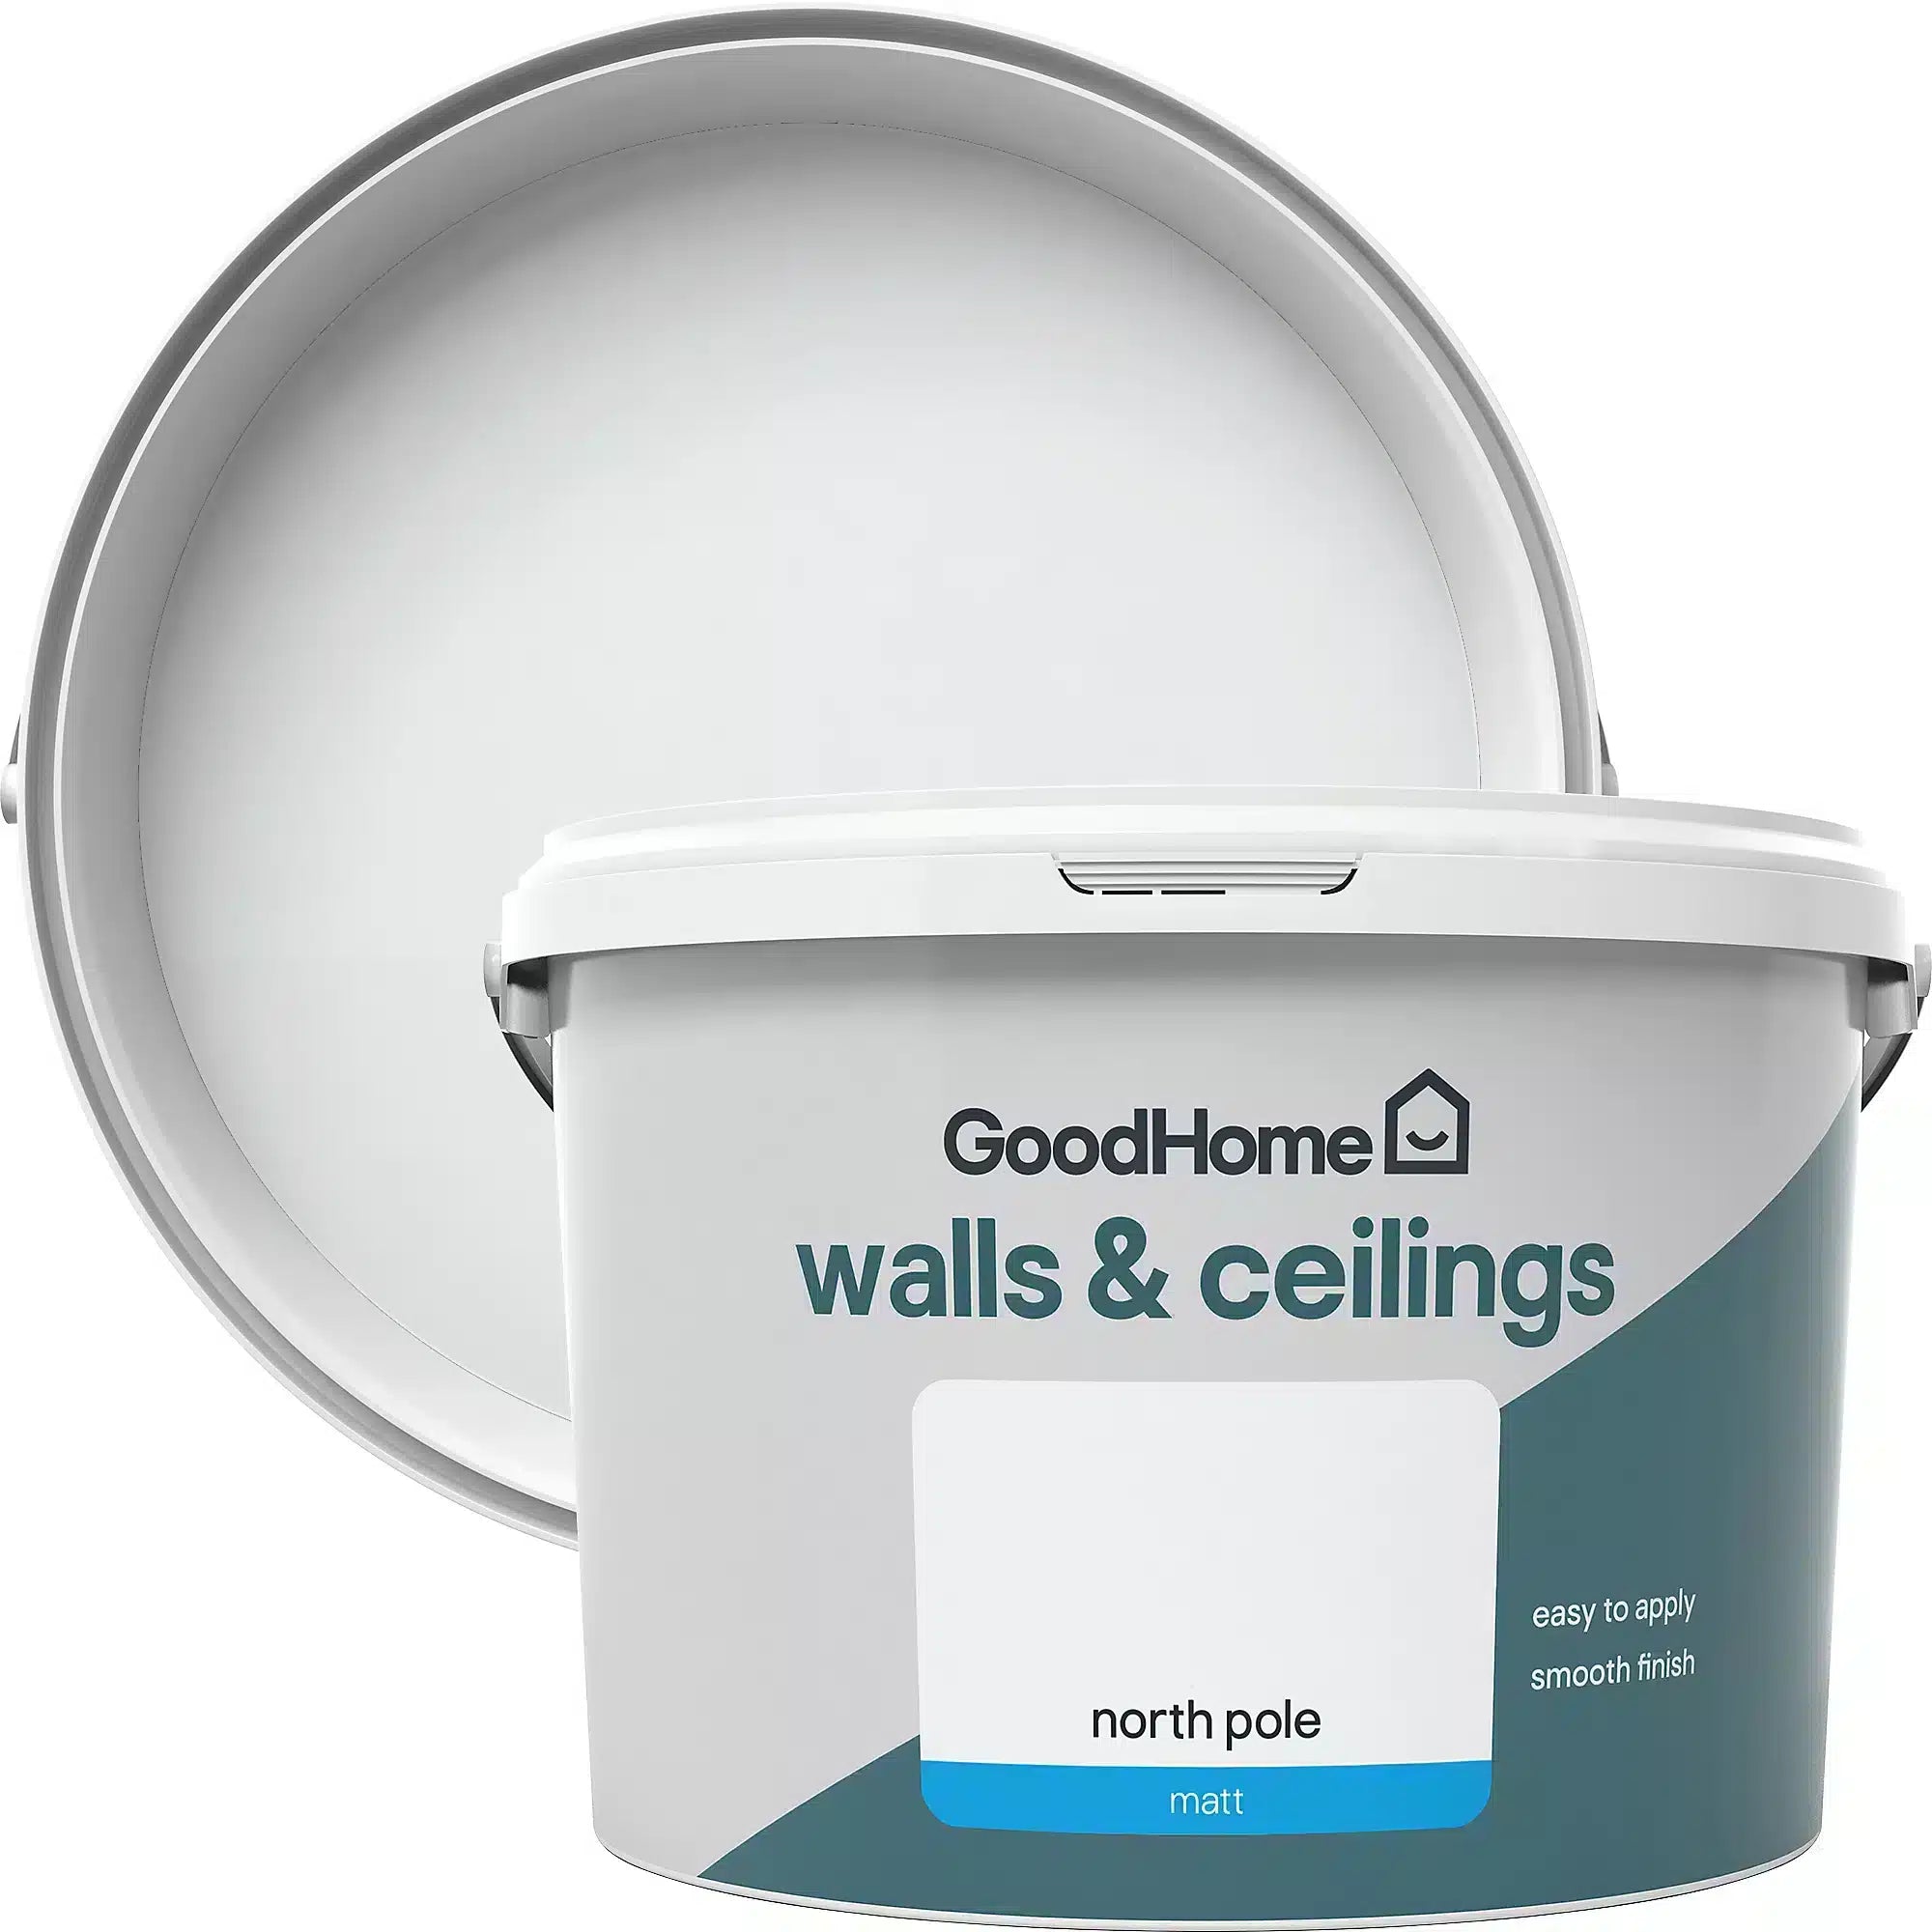 GoodHome Walls & ceilings North pole Matt Emulsion paint, 2.5L 1001